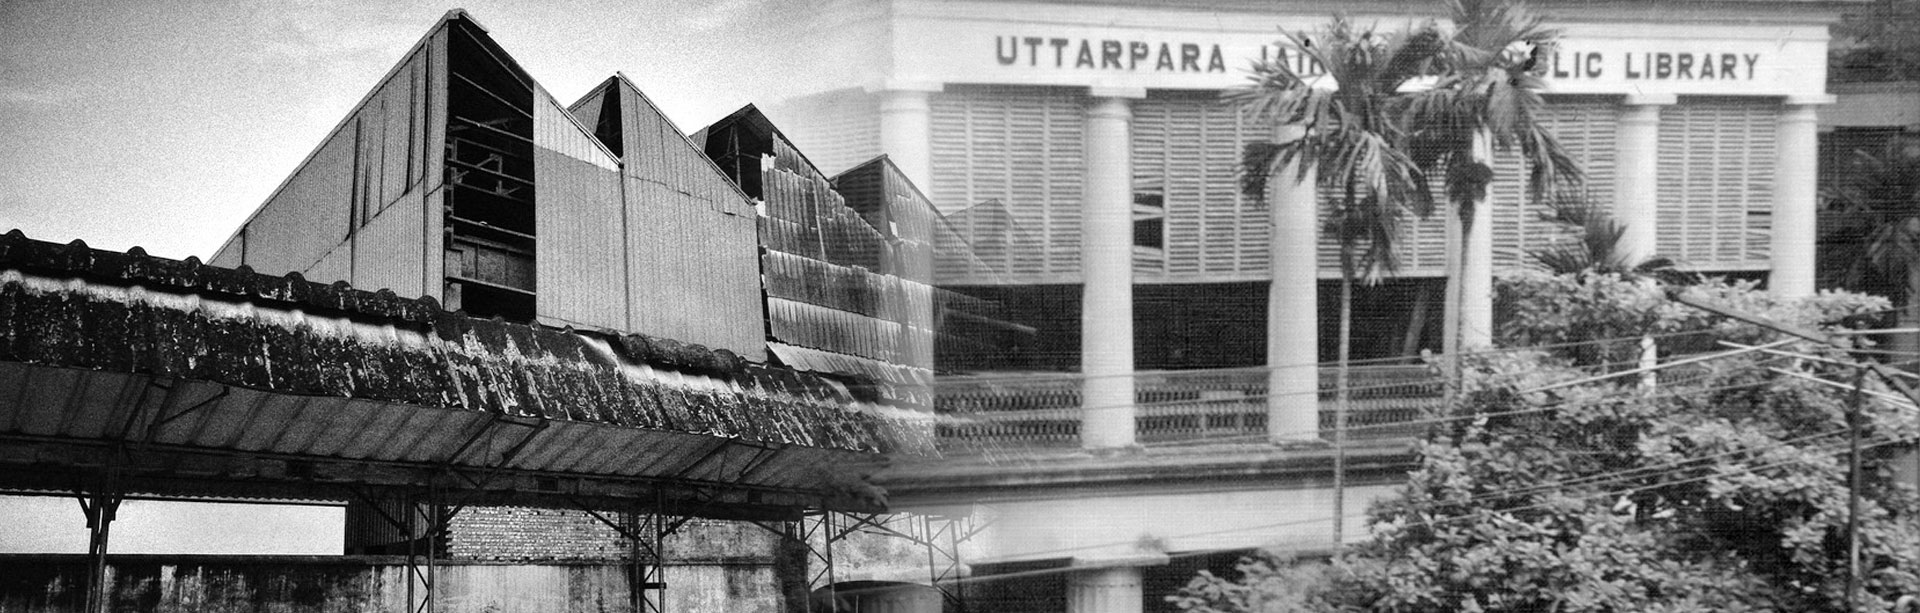 History of Uttarpara